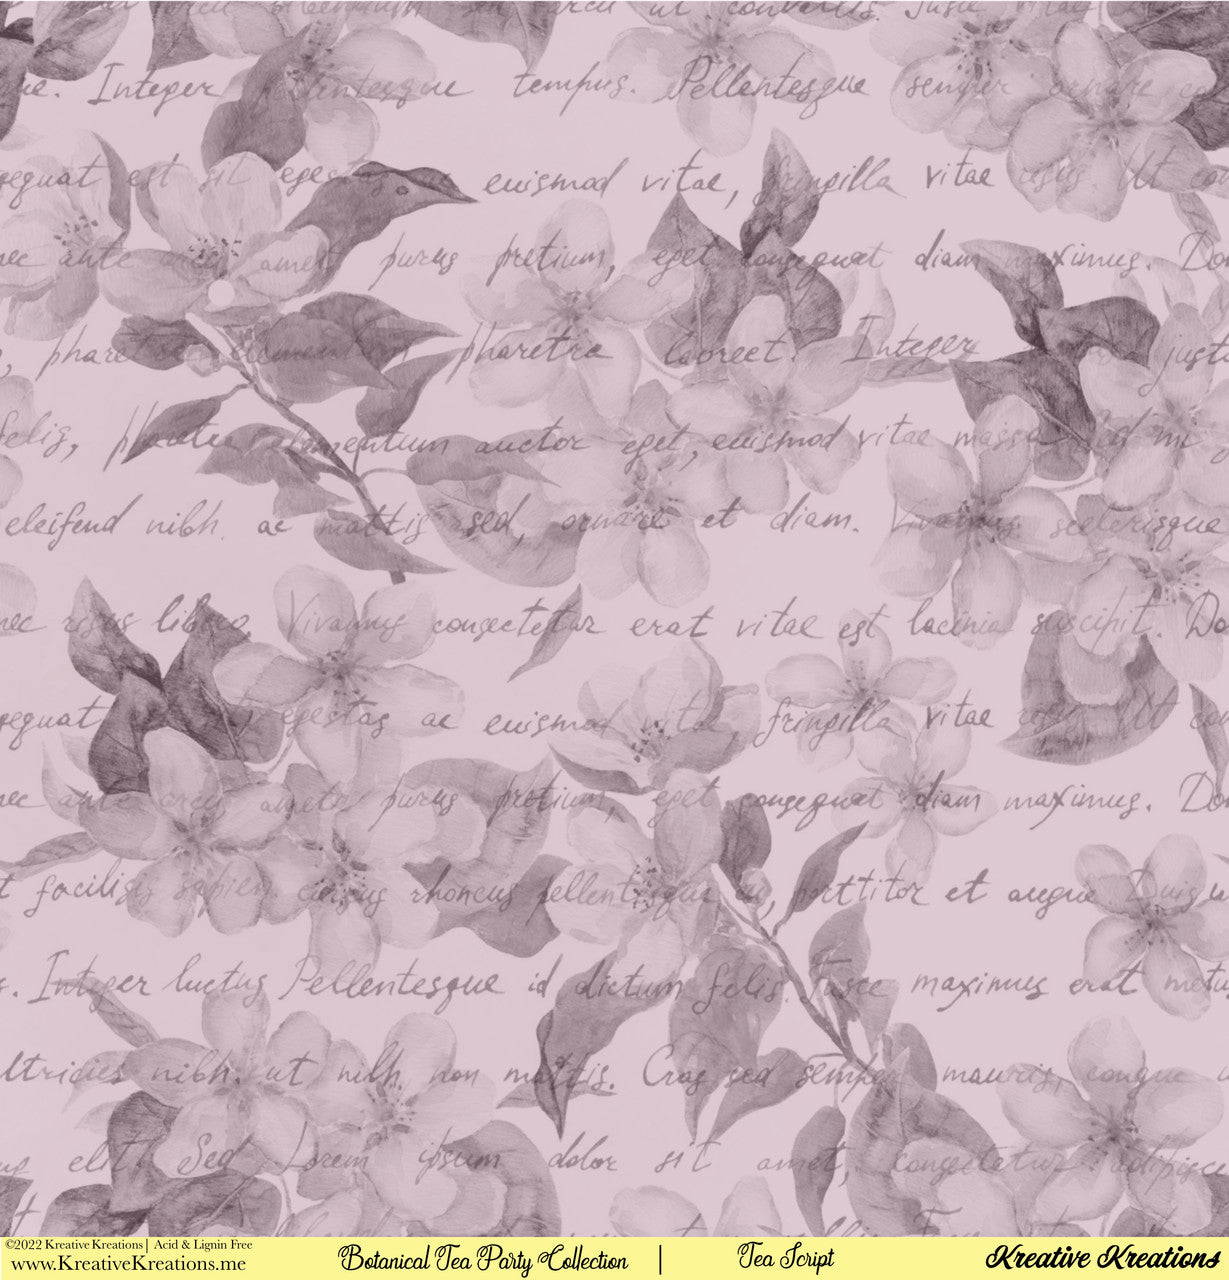 Kreative Kreations Botanical Tea Party Colección de papel de 12" x 12"